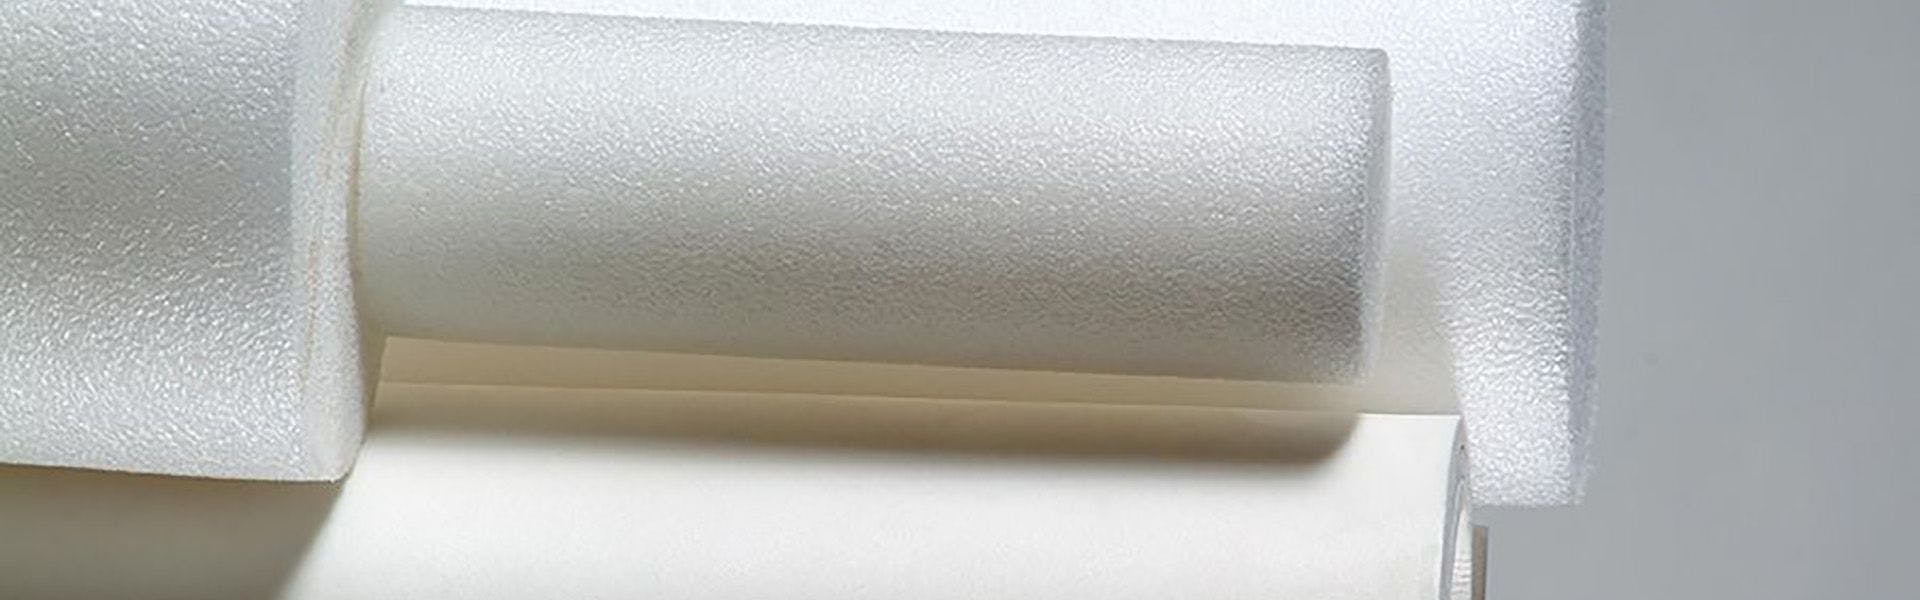 Custom Foam Inserts For Safe & Secure Packaging